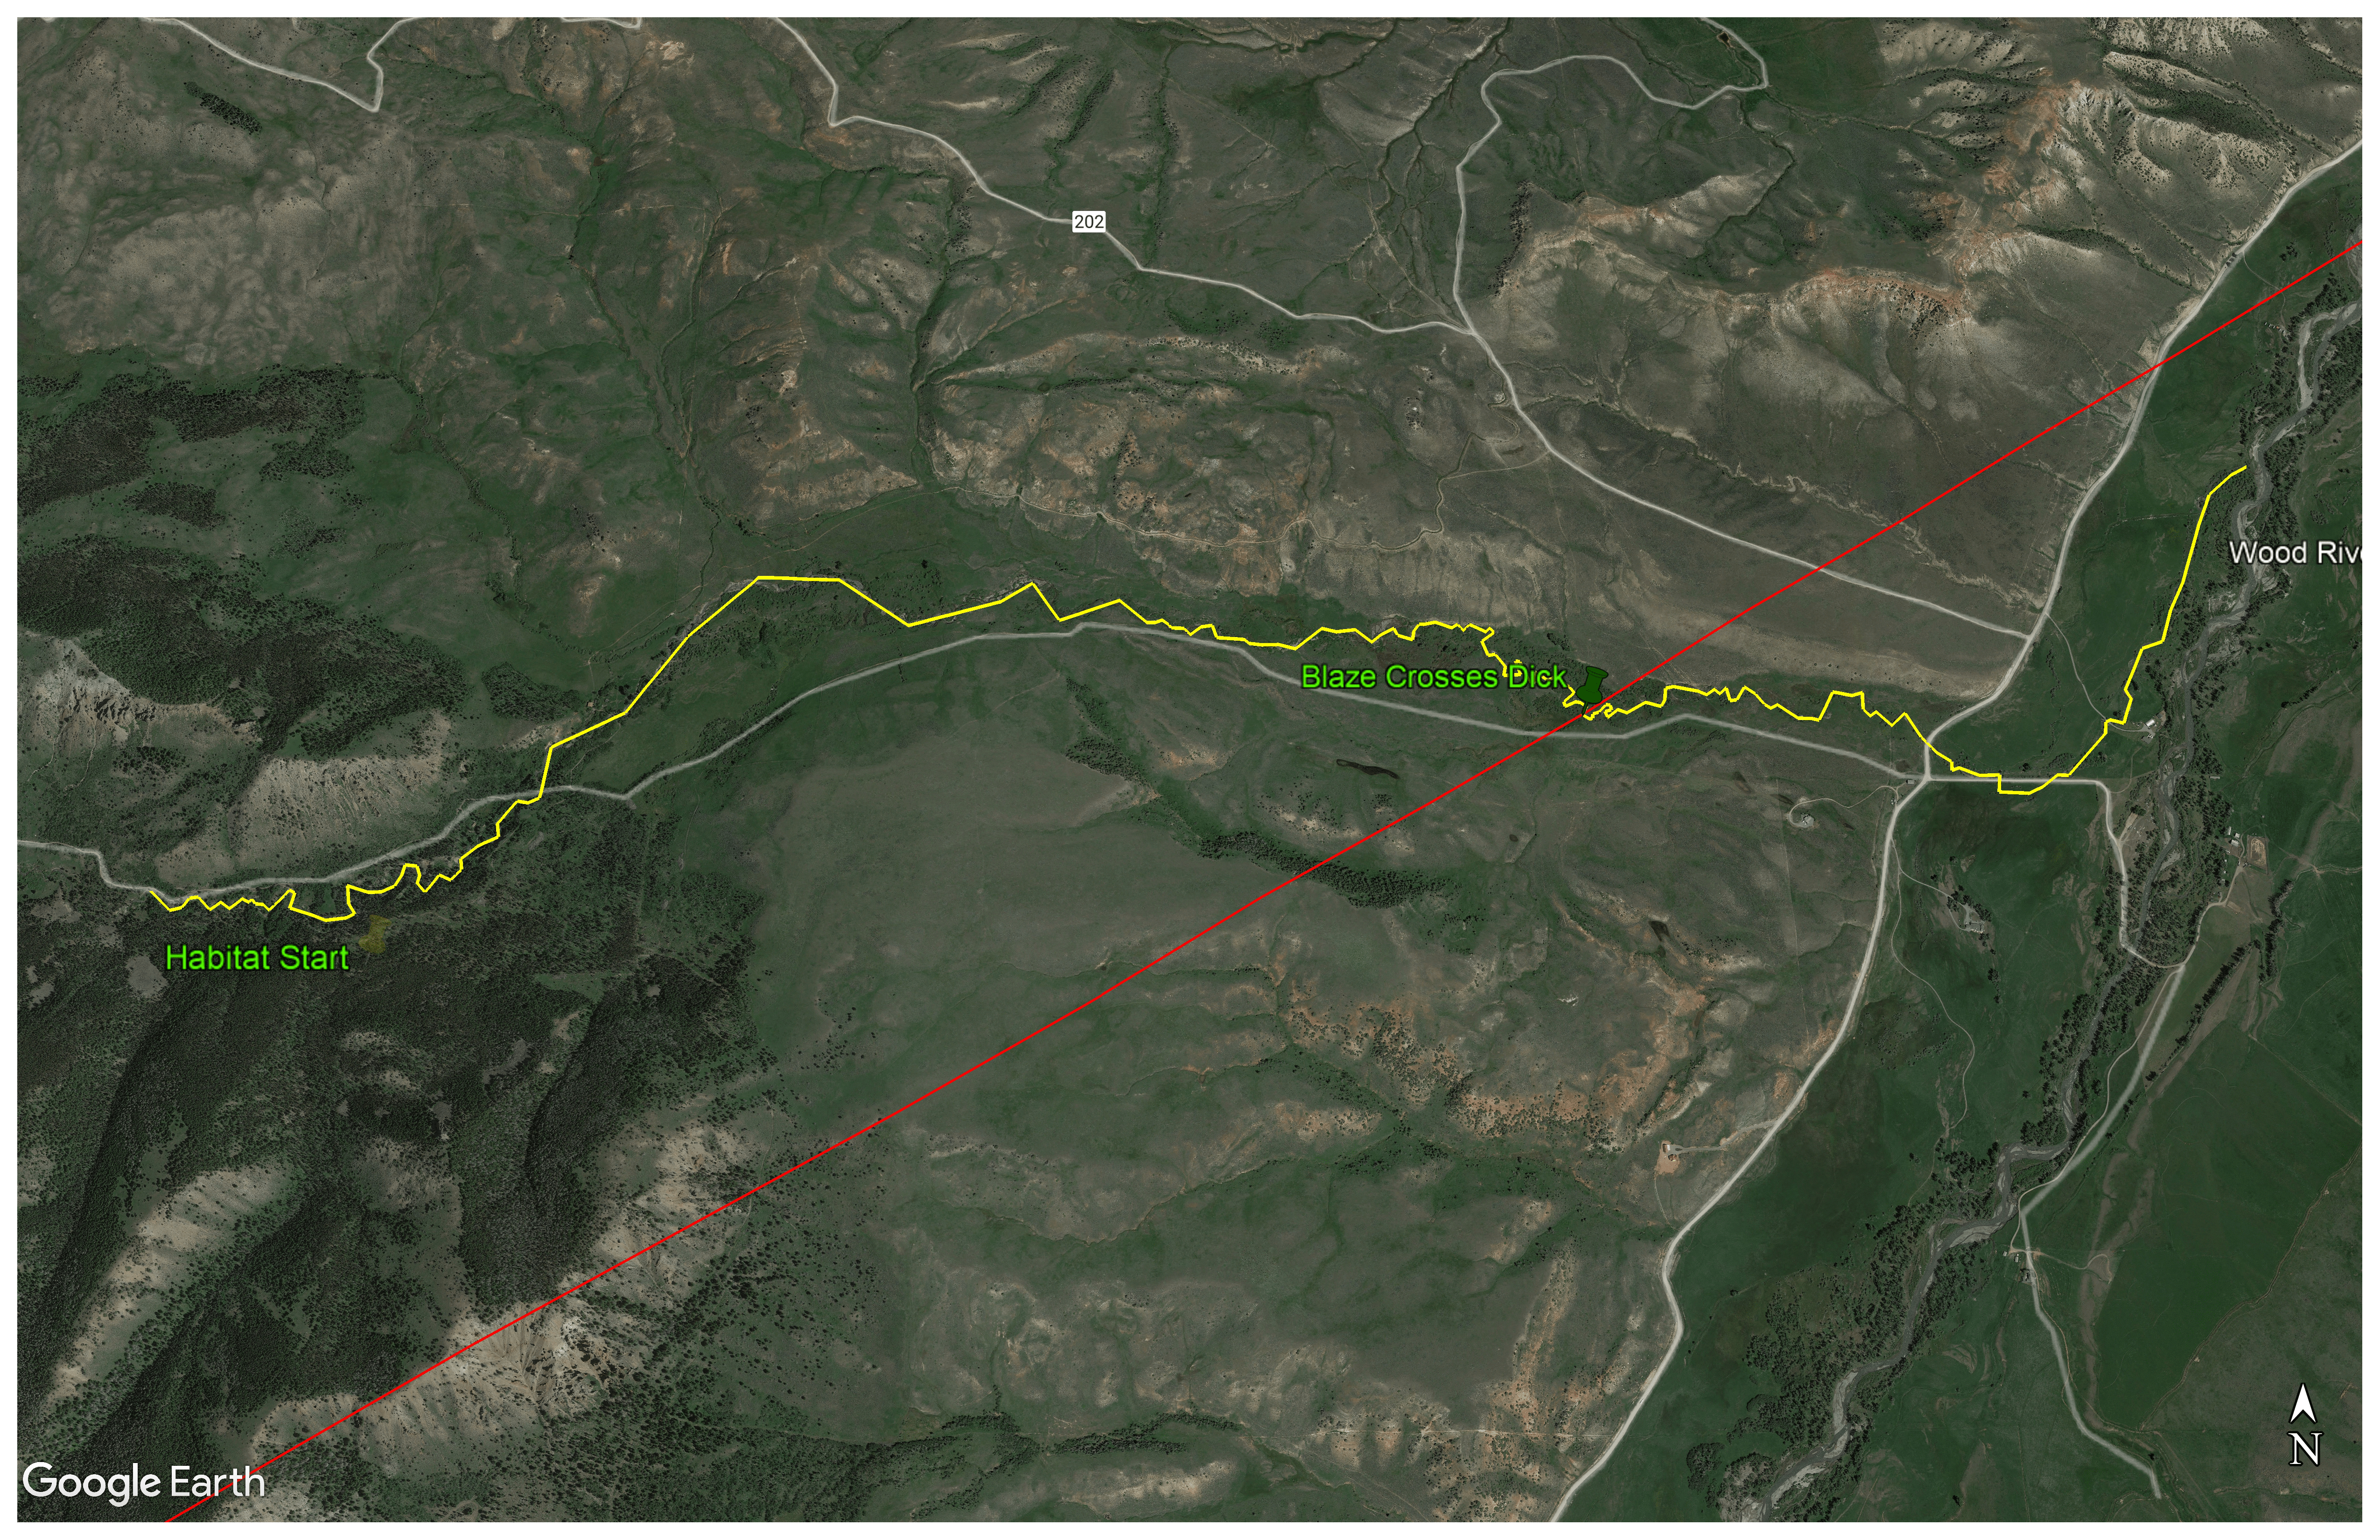 IMG: Map of Blaze Crossing Dick Creek, Google Earth